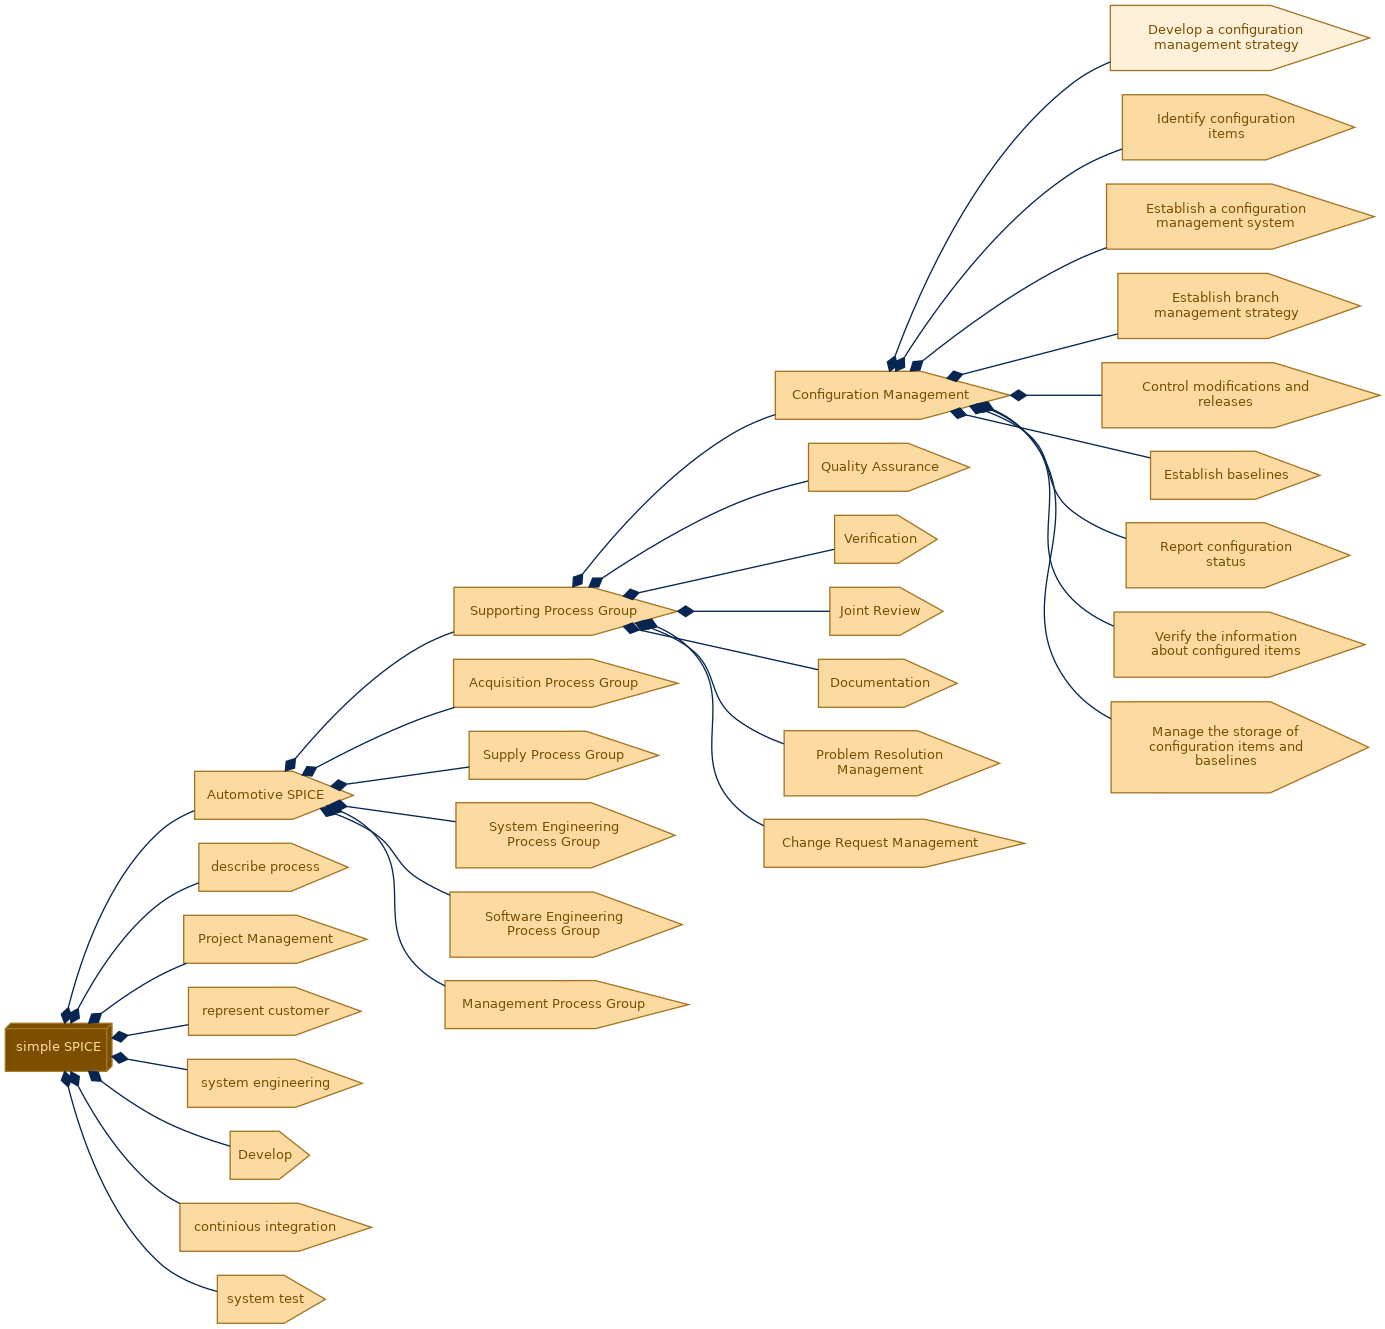 spem diagram of the activity breakdown: Develop a configuration management strategy